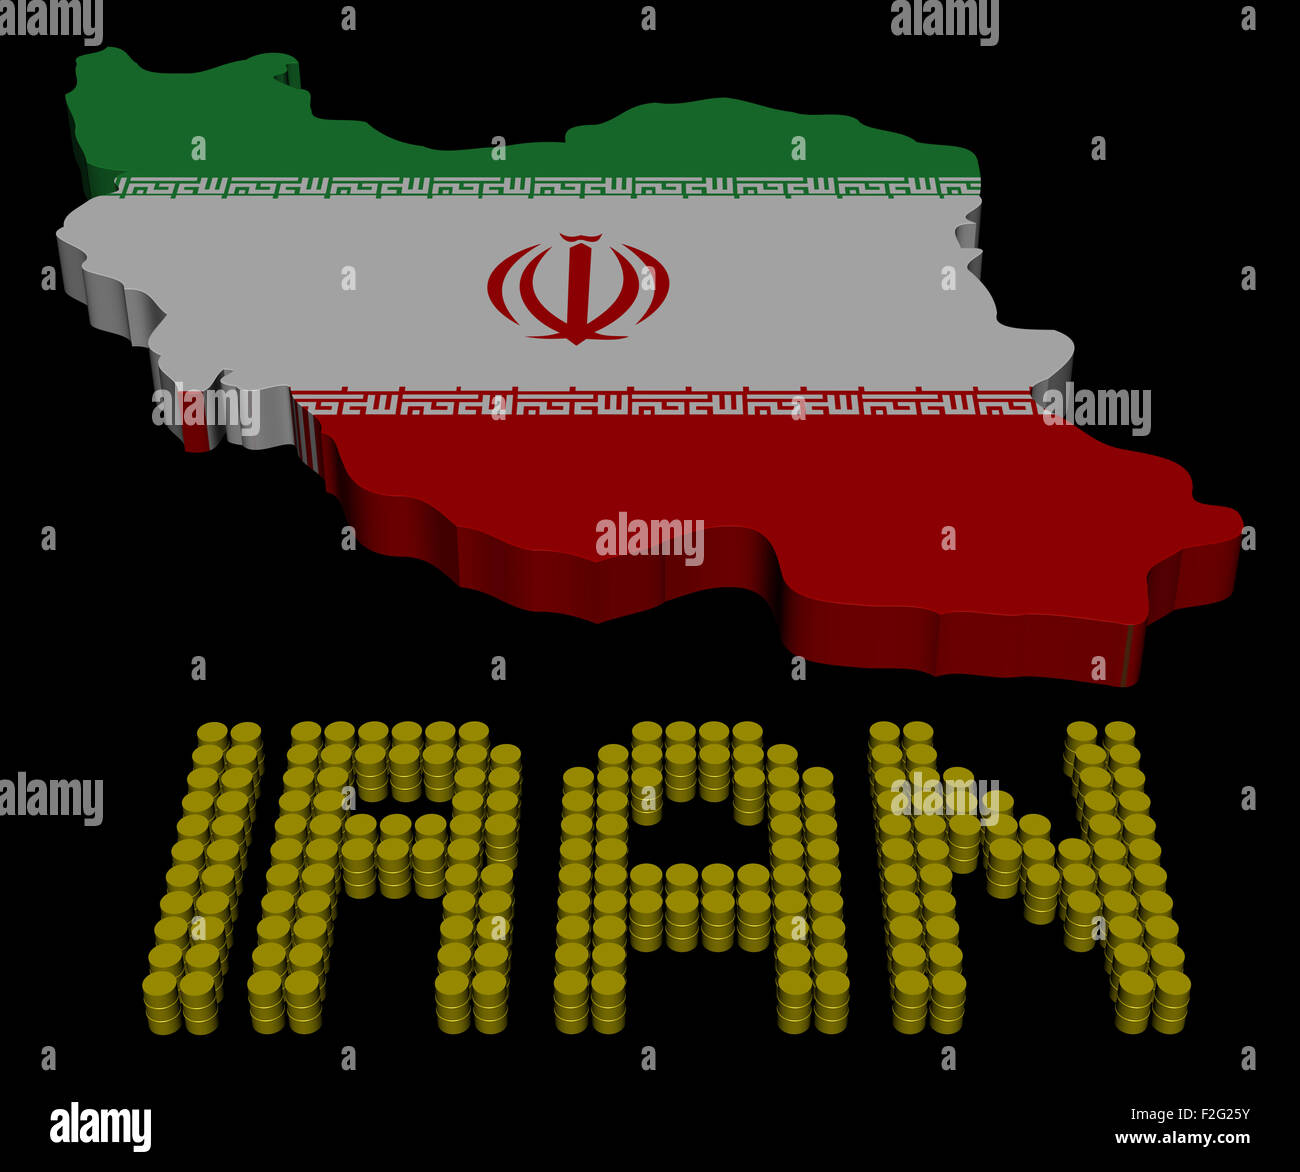 Iran barrel text with map flag illustration Stock Photo